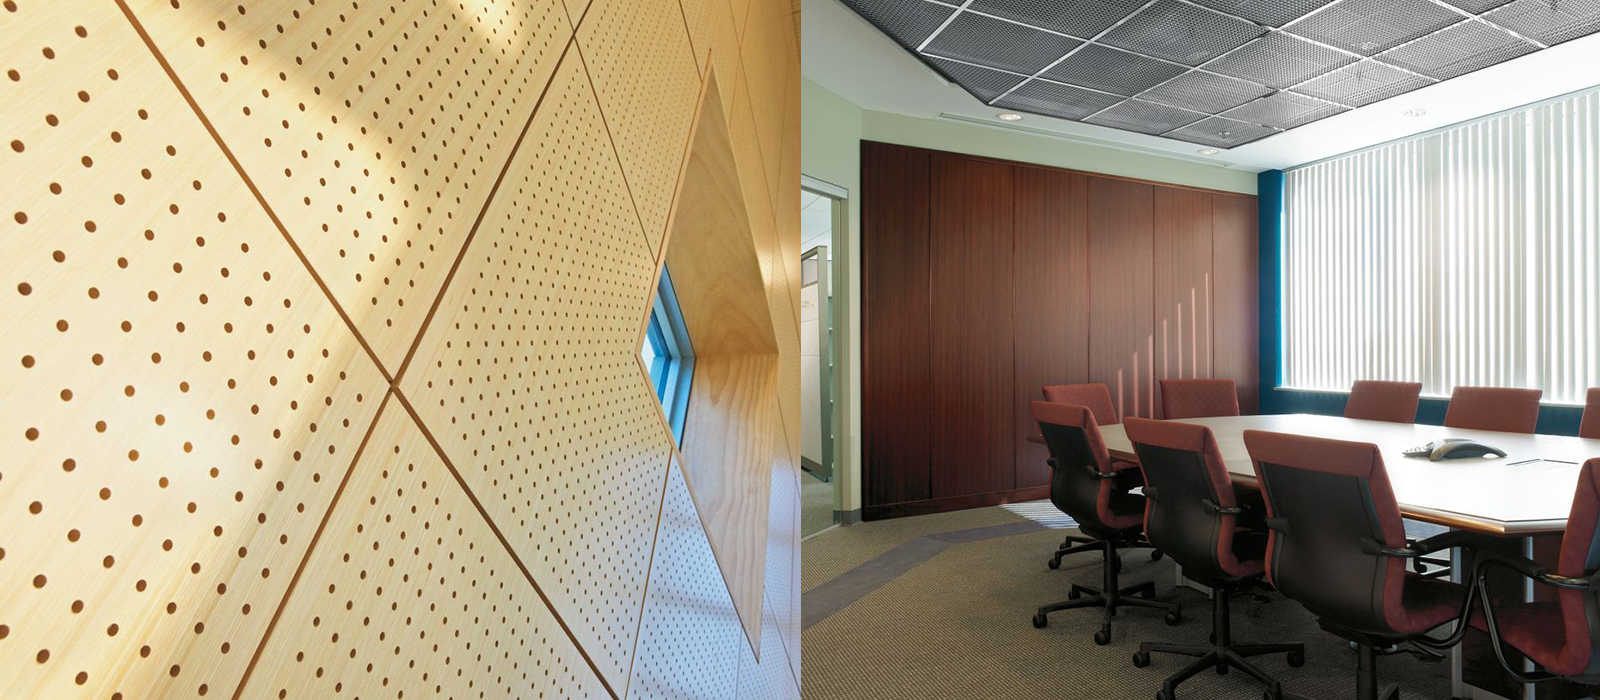 NH MA Acoustic Wall Panels fabrics woods metals translucent walls partitions